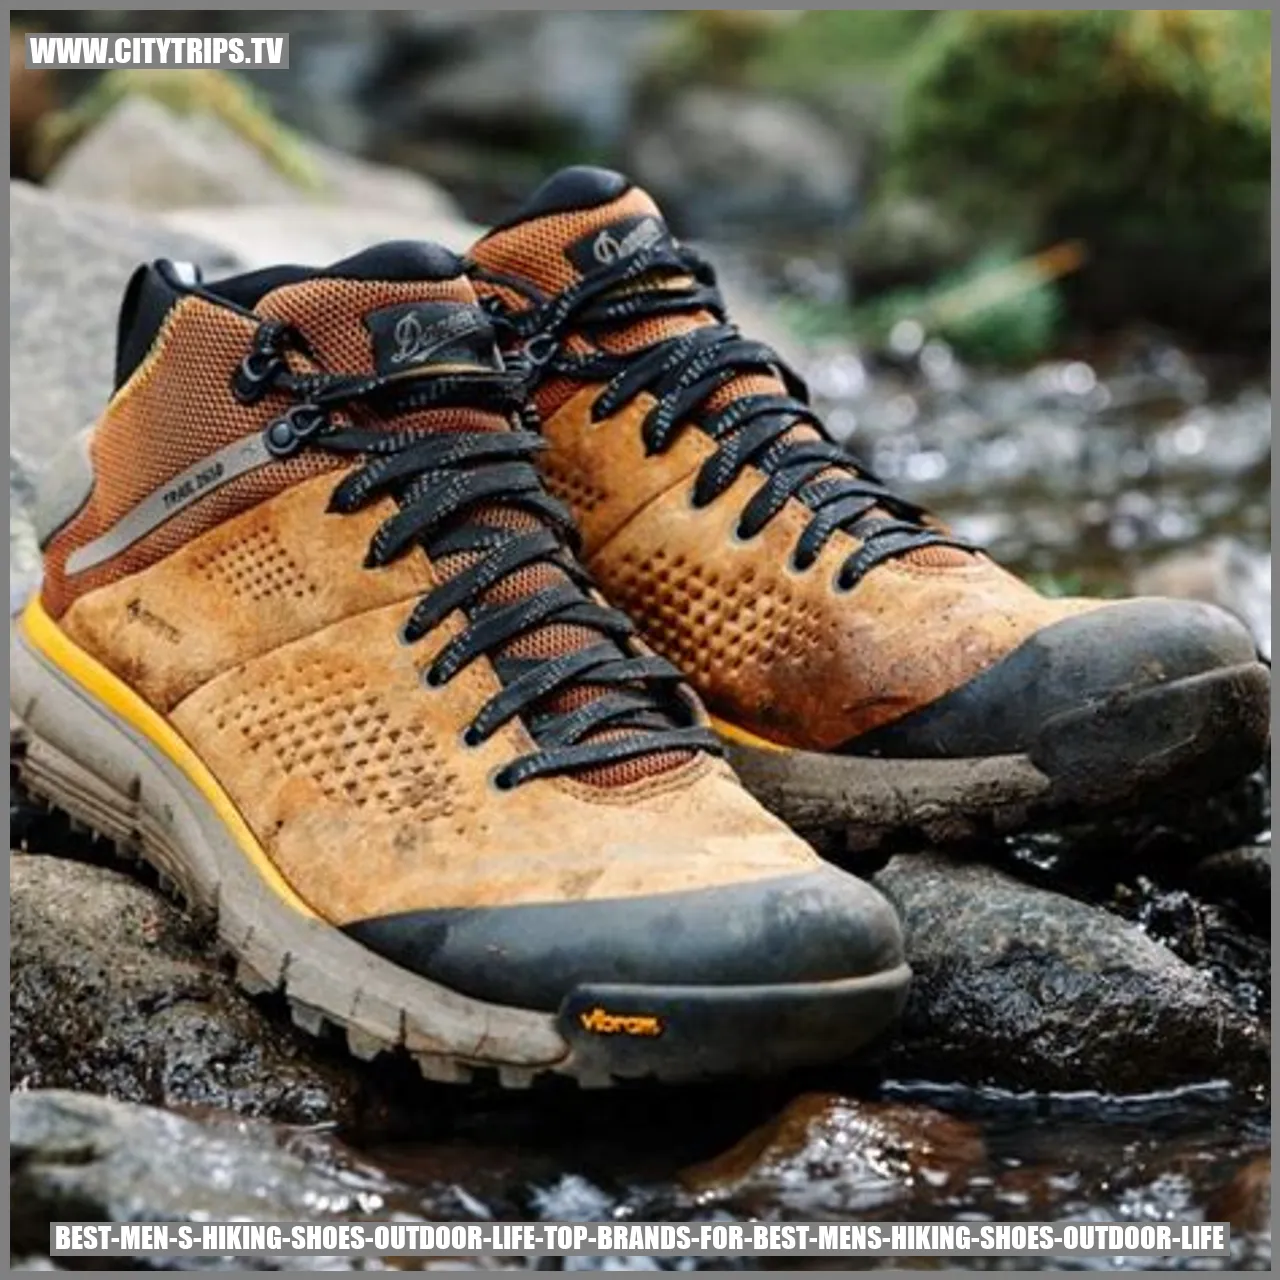 Best Men's Hiking Shoes Outdoor Life